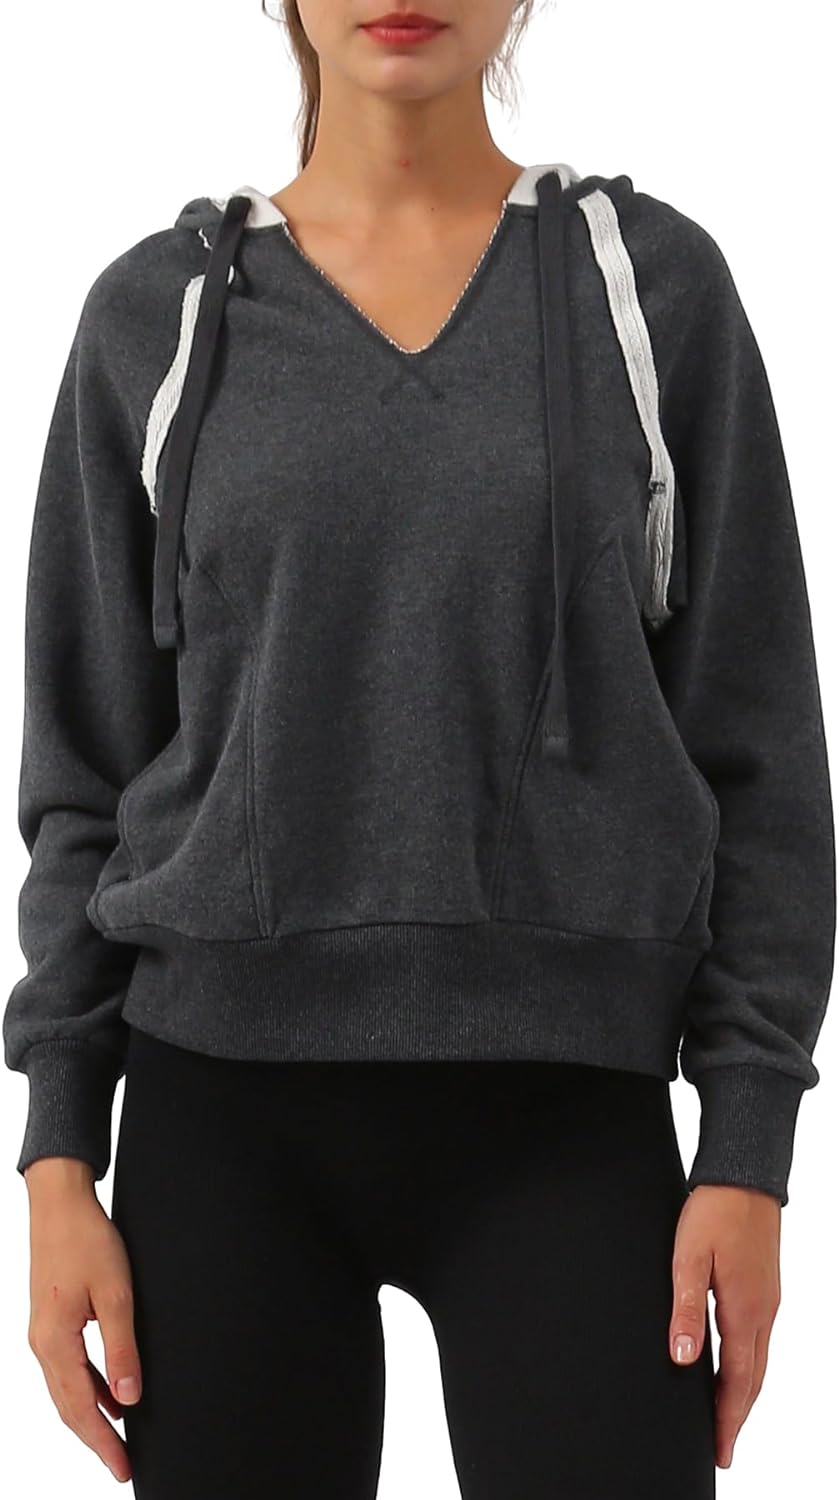 NTG Fad Heather Grey / Small Long Sleeve Hoodie with Pockets Hooded Sweatshirt